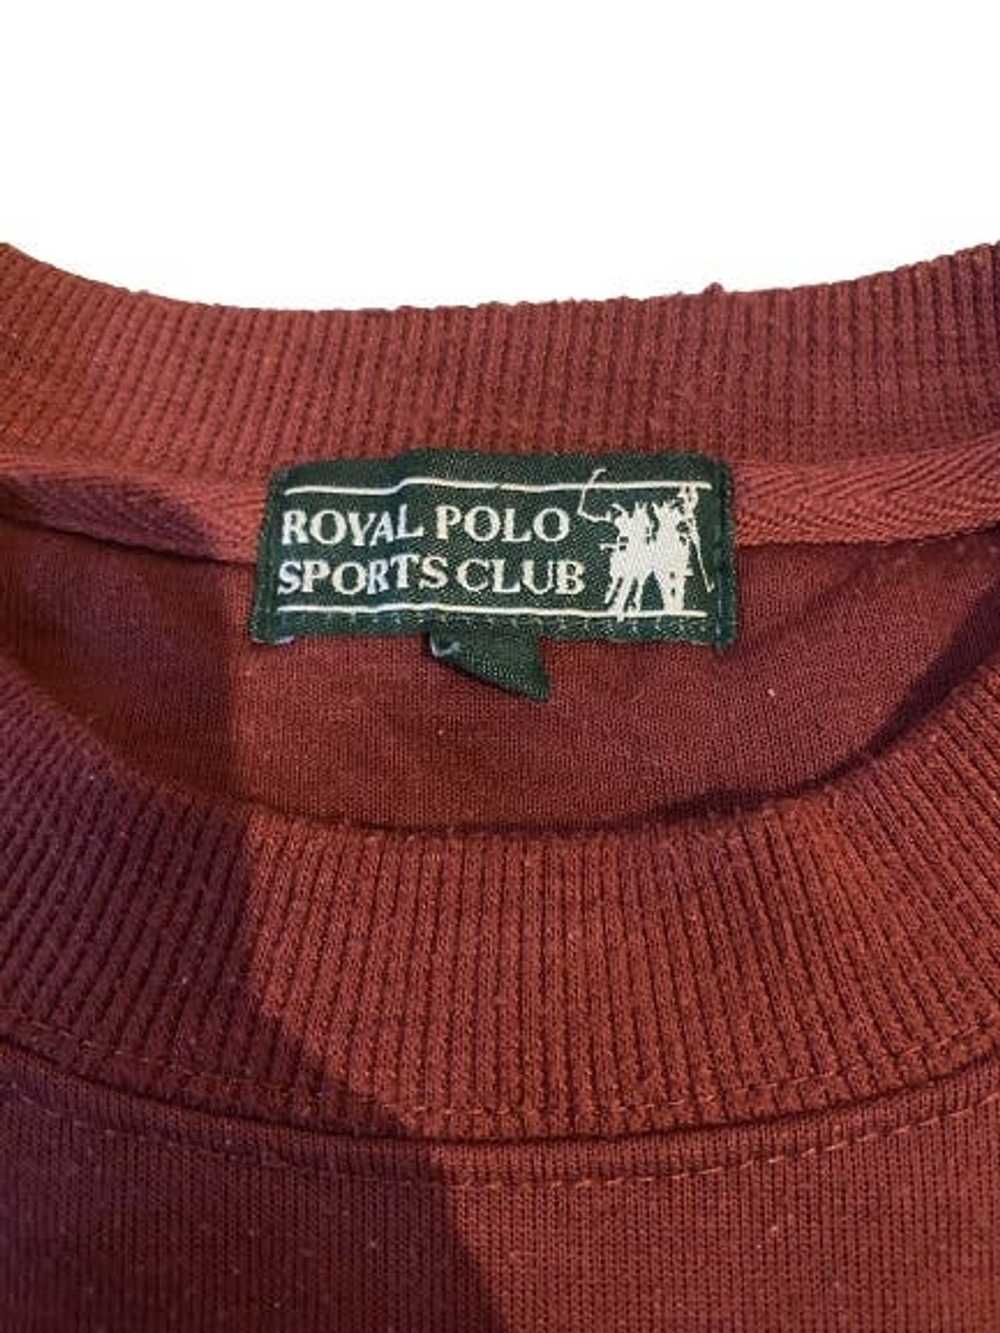 Polo Ralph Lauren Vintage Royal Polo Sports club - image 2